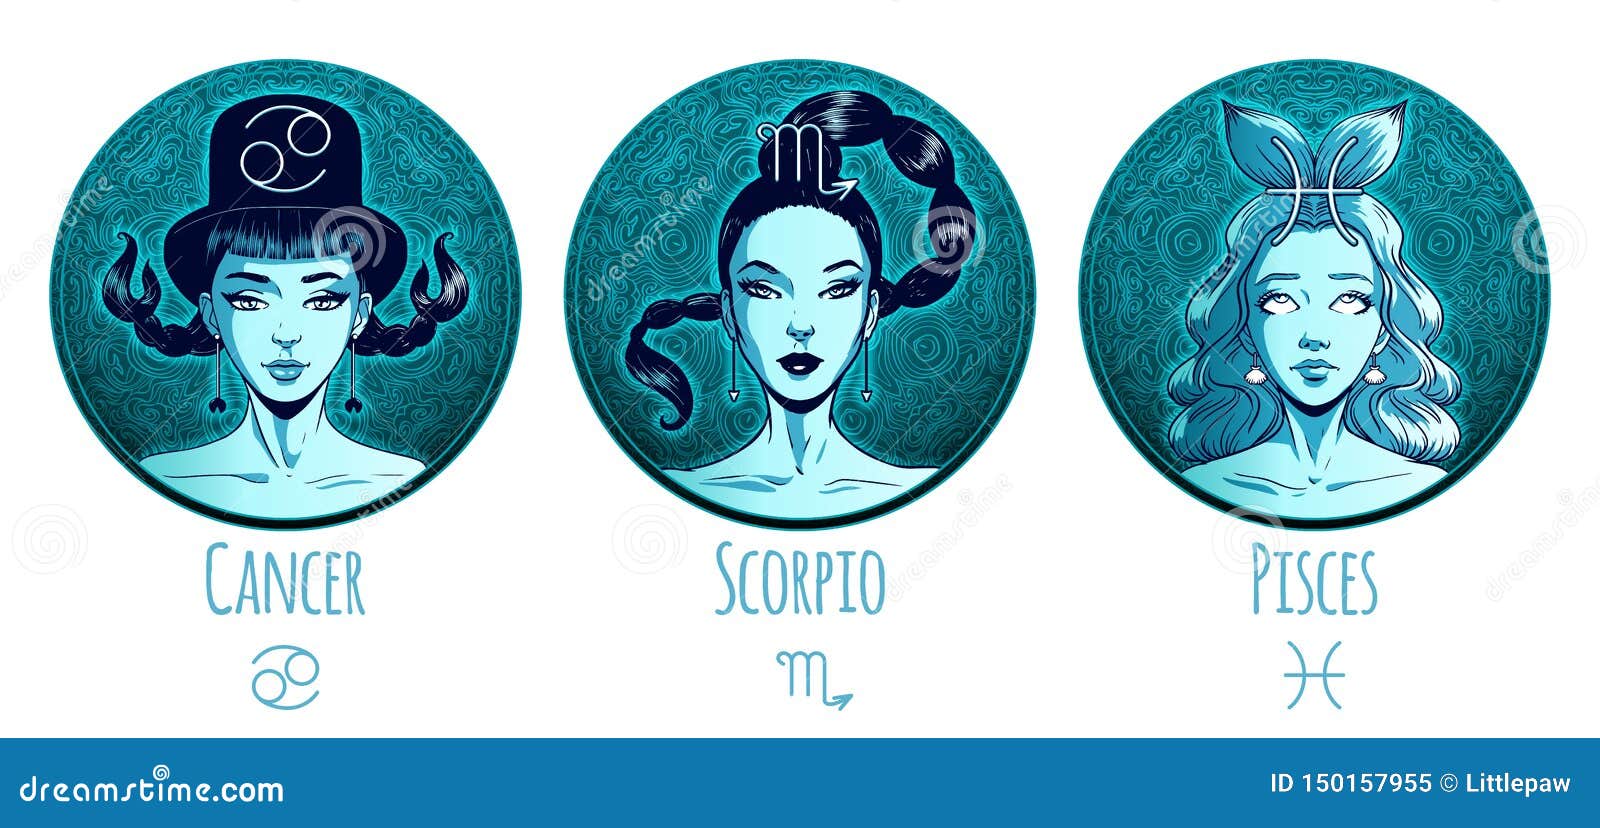 water zodiac set, beautiful girls, cancer, scoprio, pisces, horoscope , star sign,  